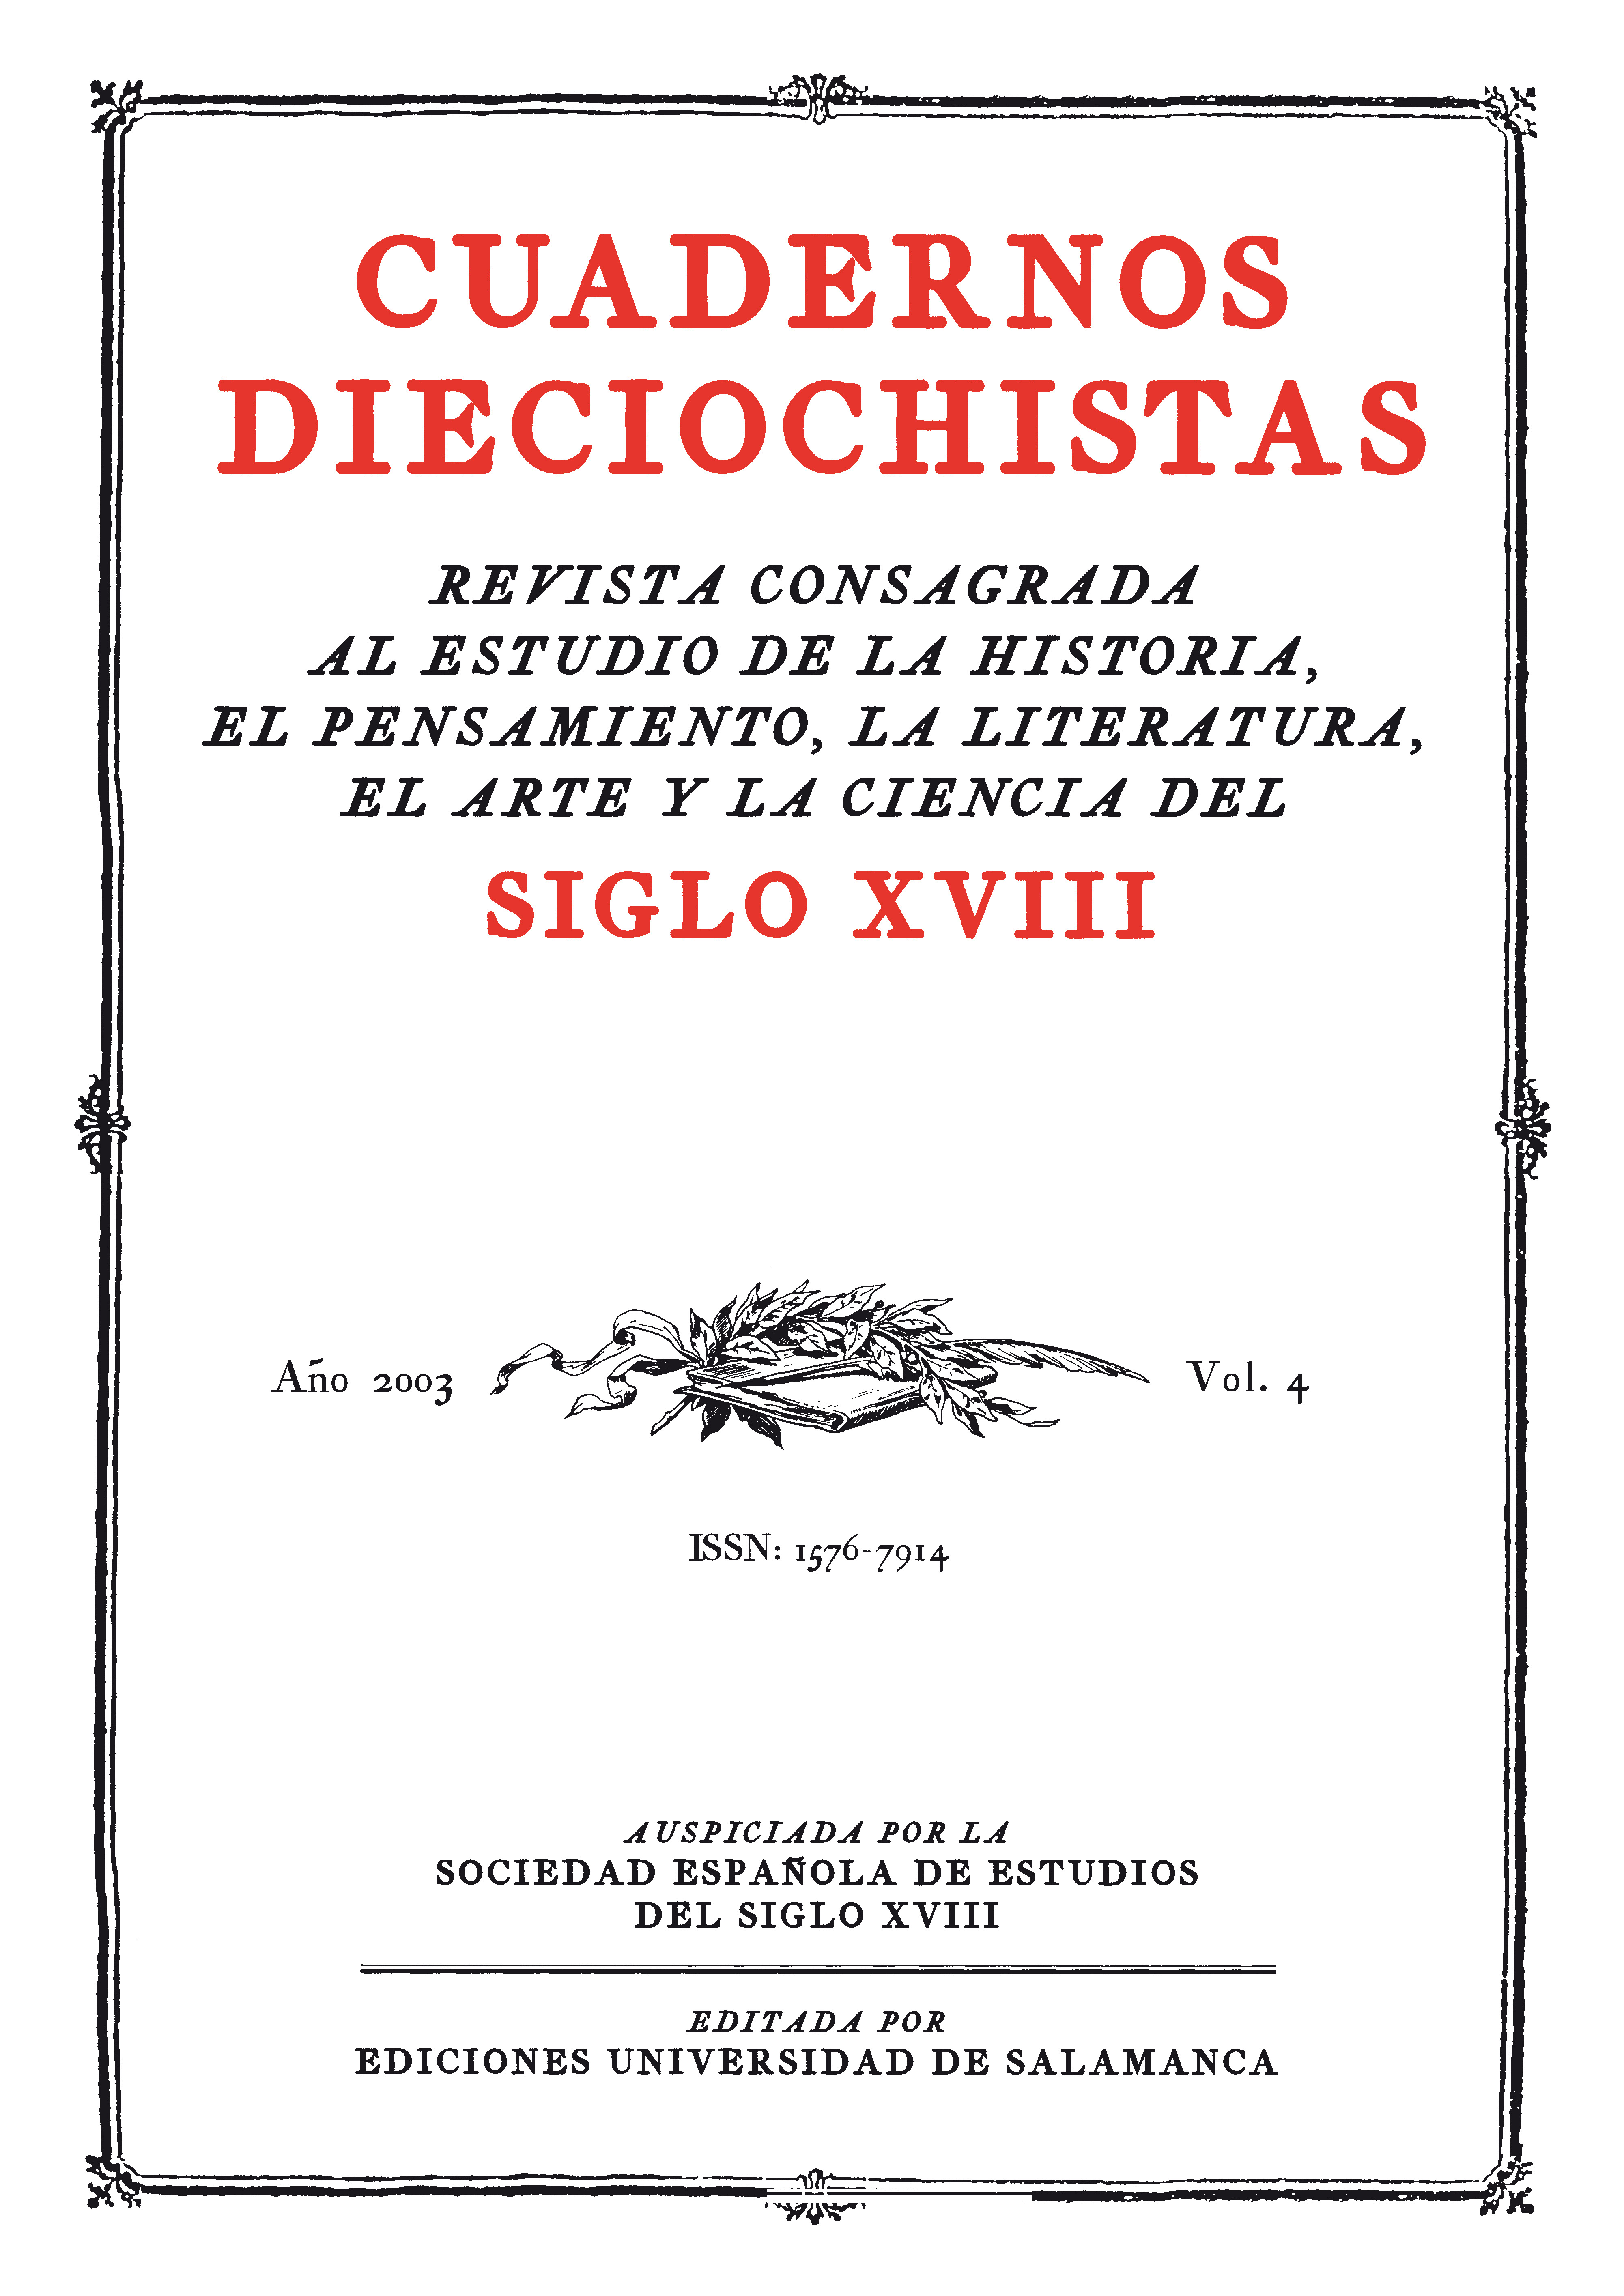                         Ver Vol. 4 (2003): Pedro Pablo de Olavide (1725-1803)
                    